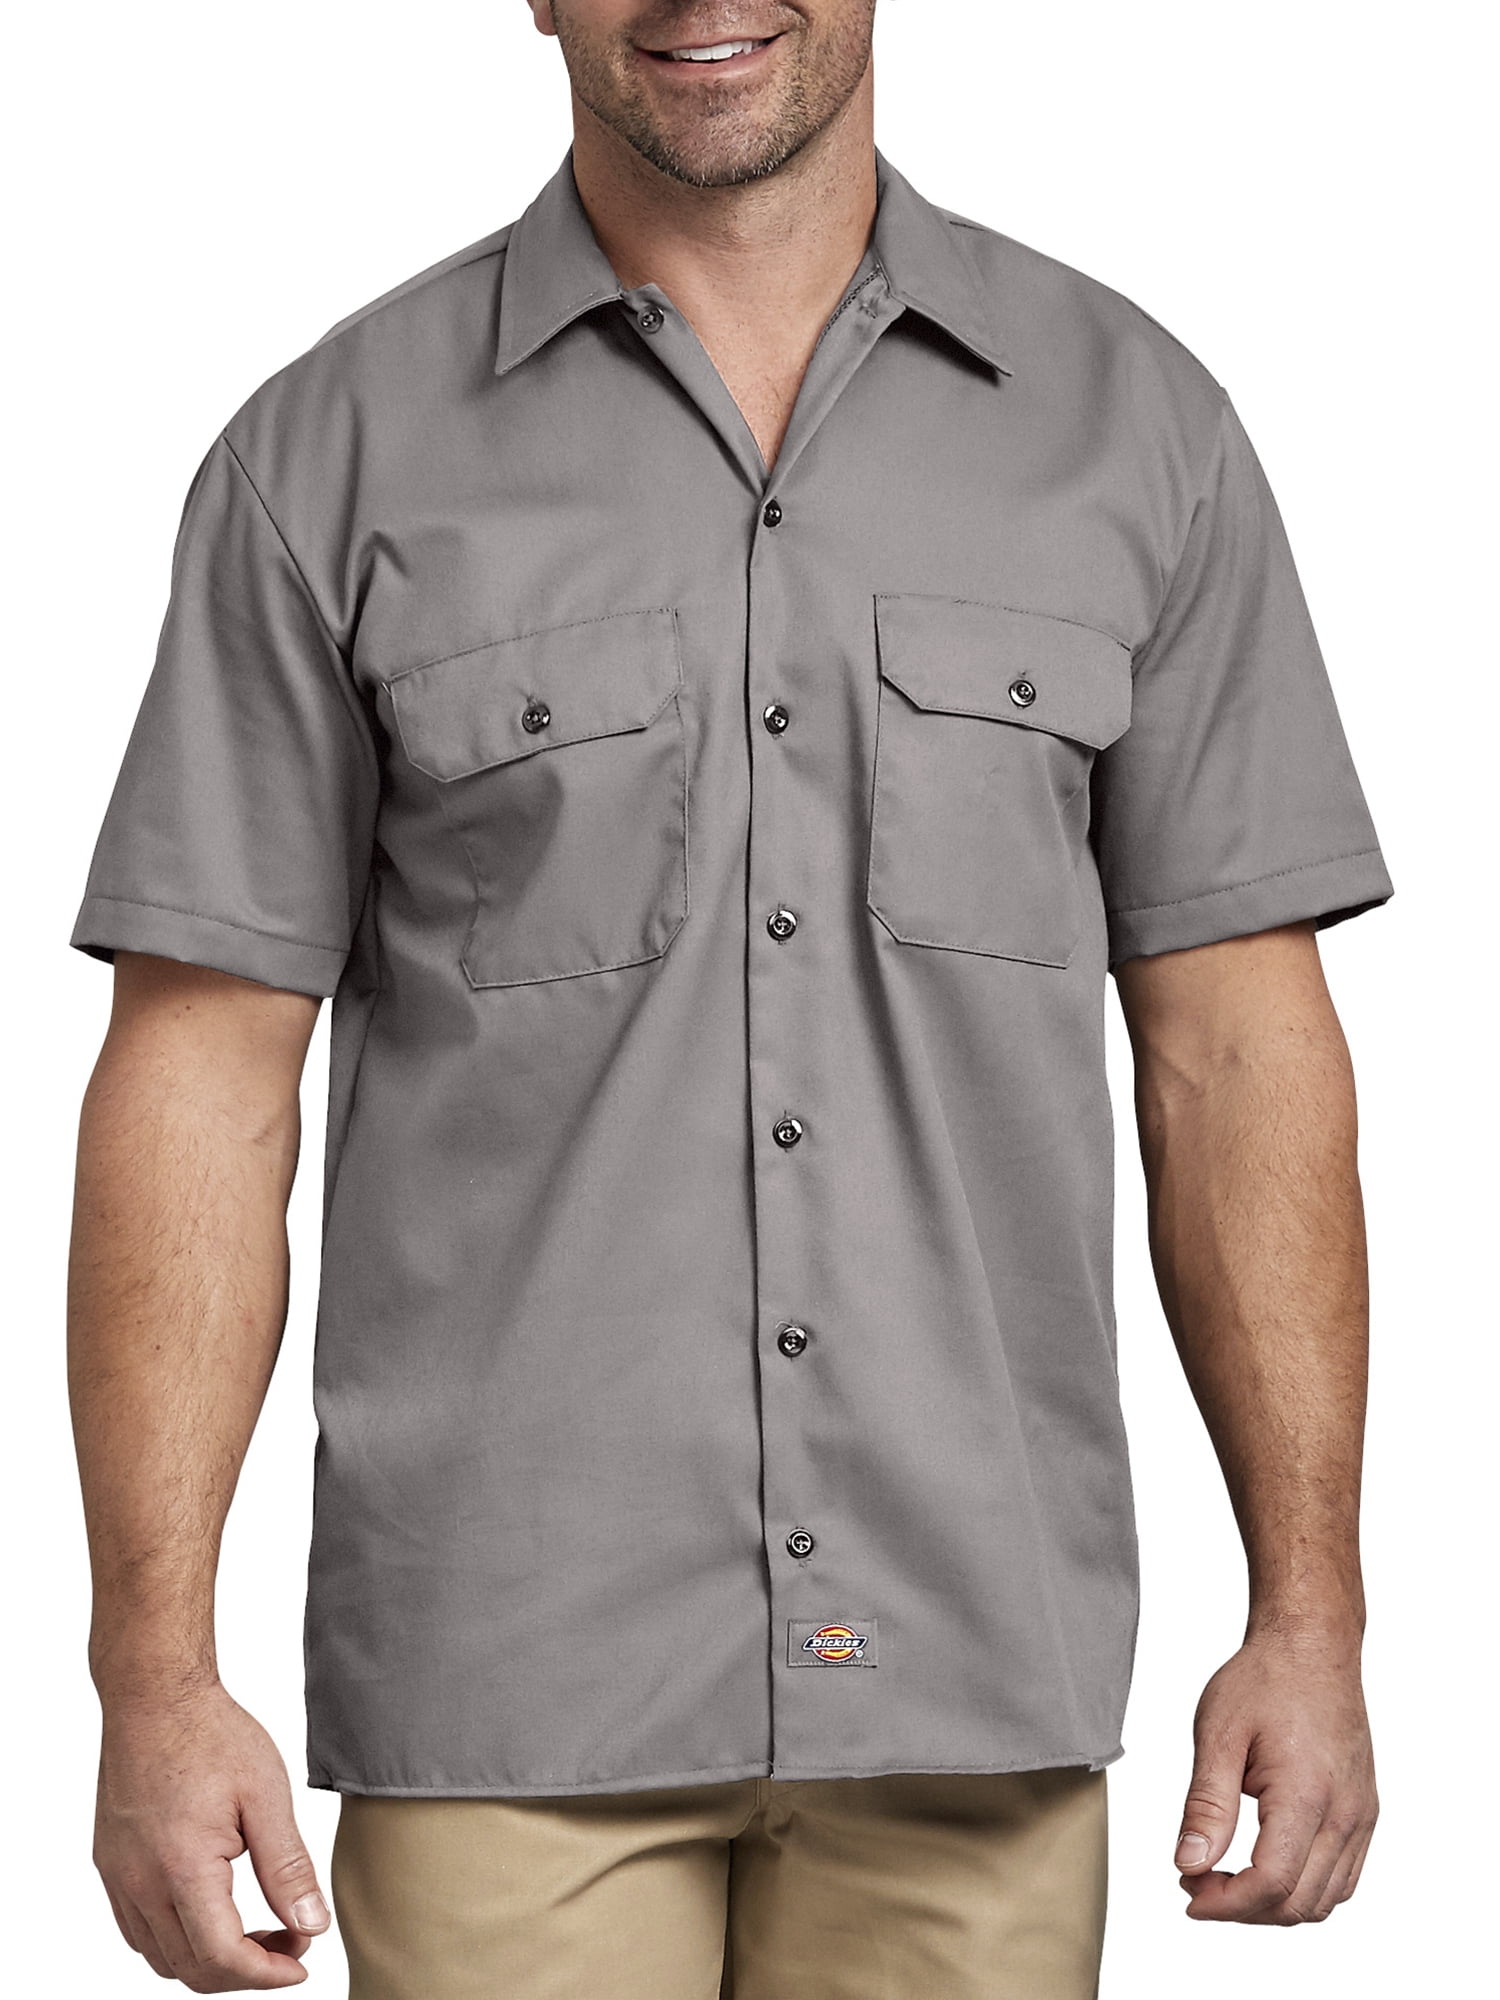 Dickies Men's Short Sleeve Twill Work Shirt - Walmart.com